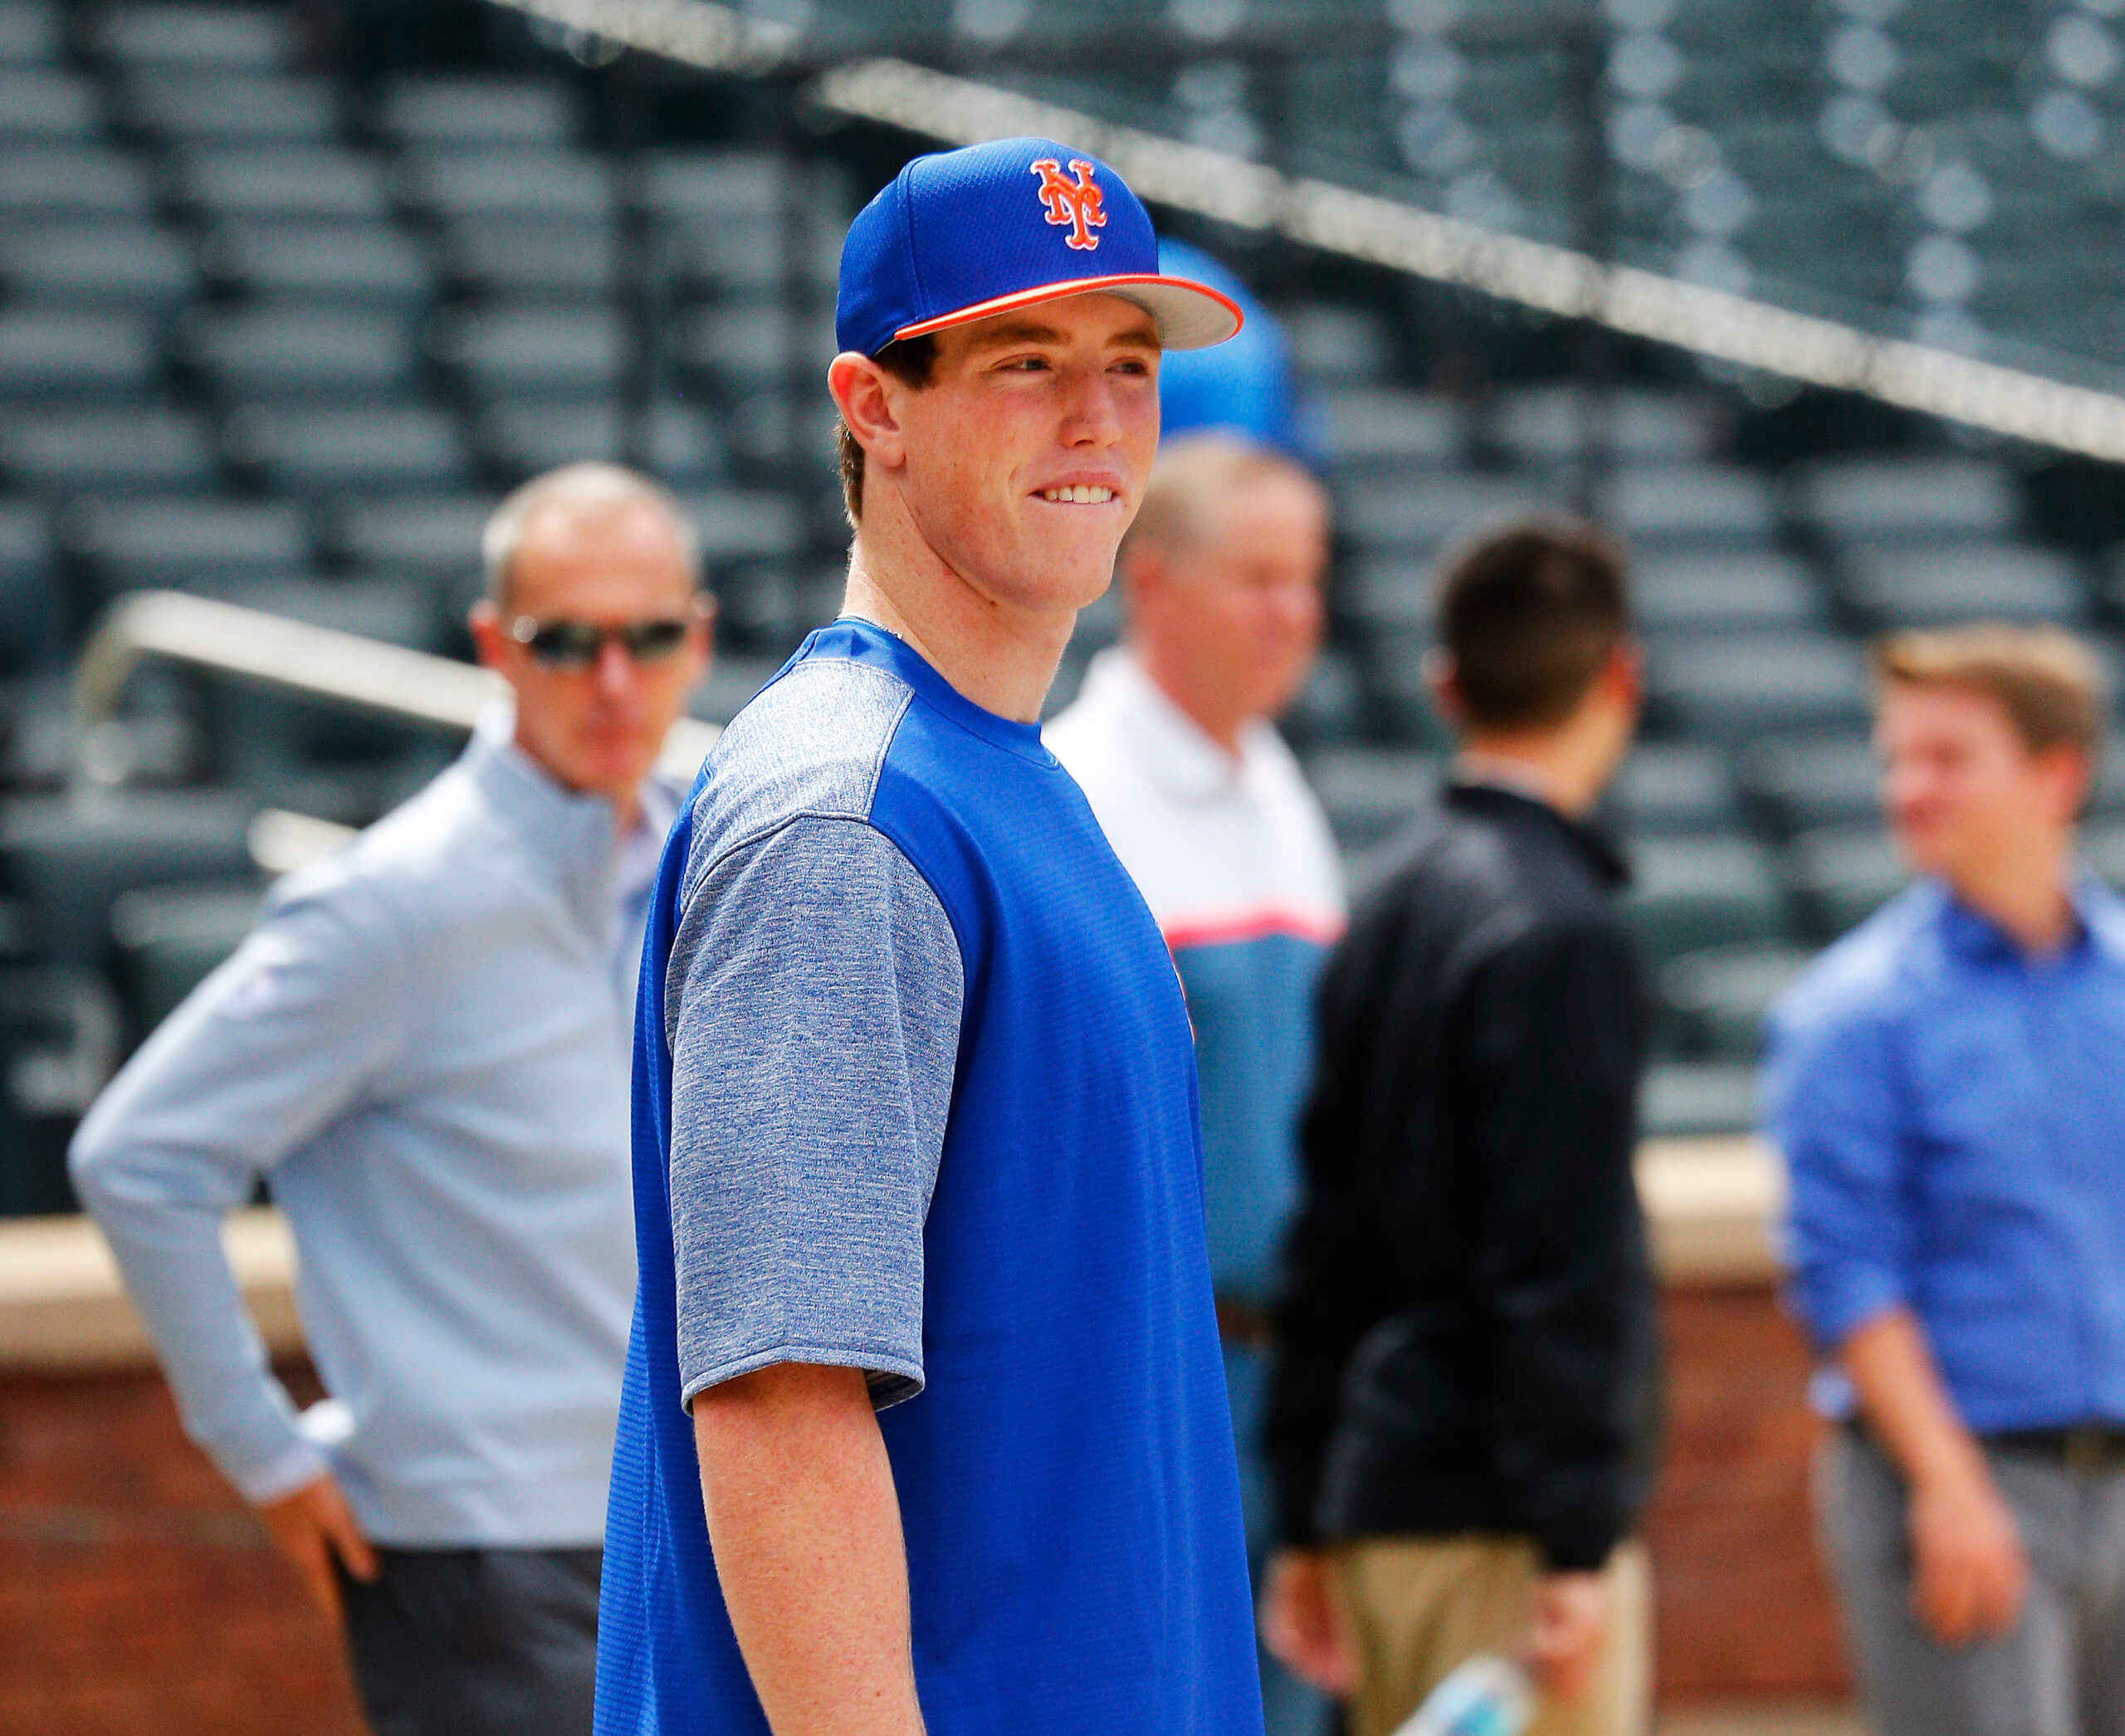 Mets promote top prospect Brett Baty, who will make MLB debut